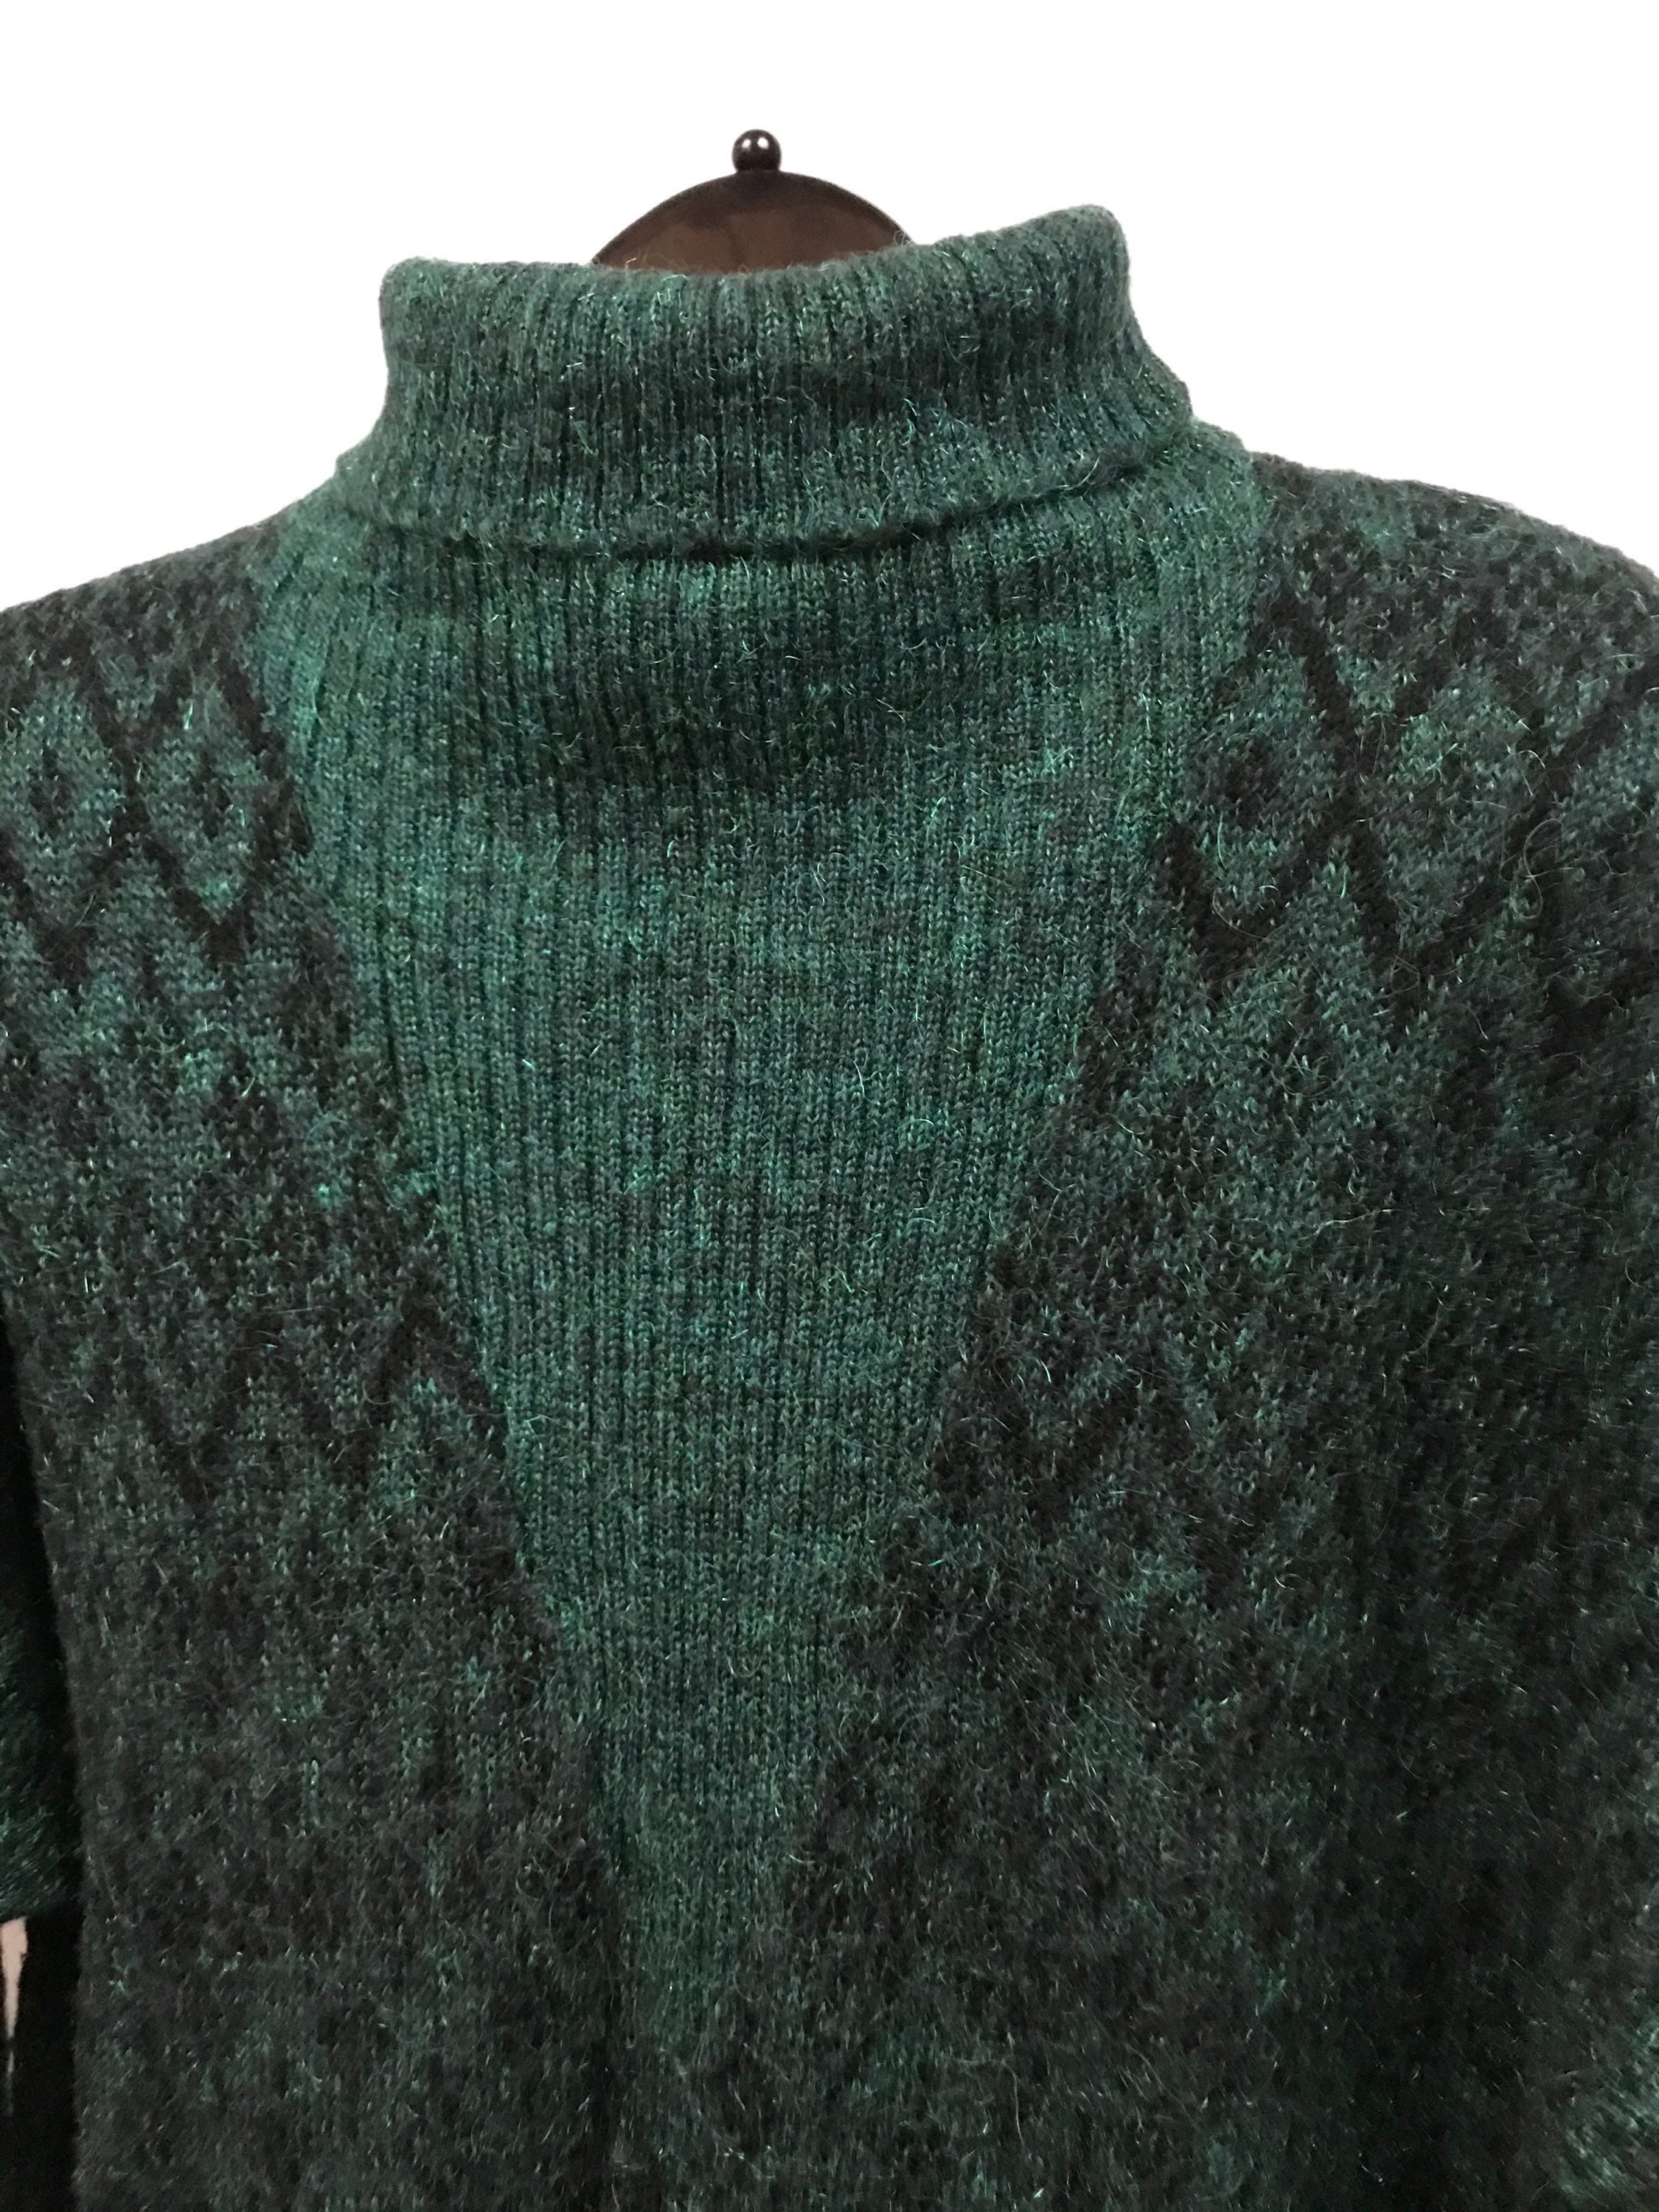 1980s Turtleneck Sweater / Argyle V Neck Print Pullover Ugly | Etsy